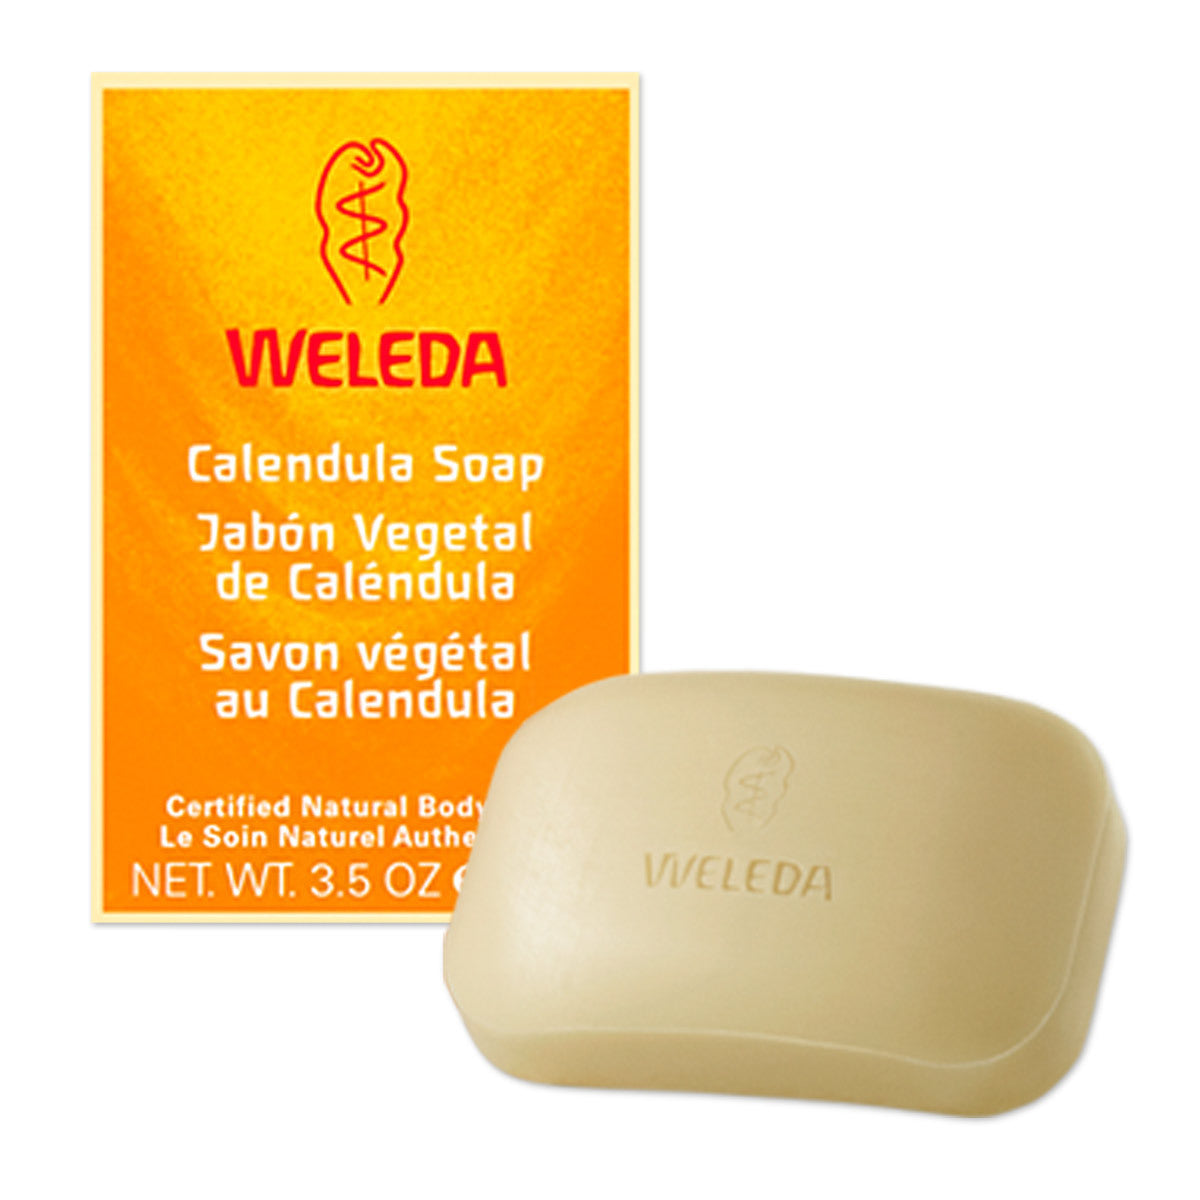 Primary image of Calendula Soap